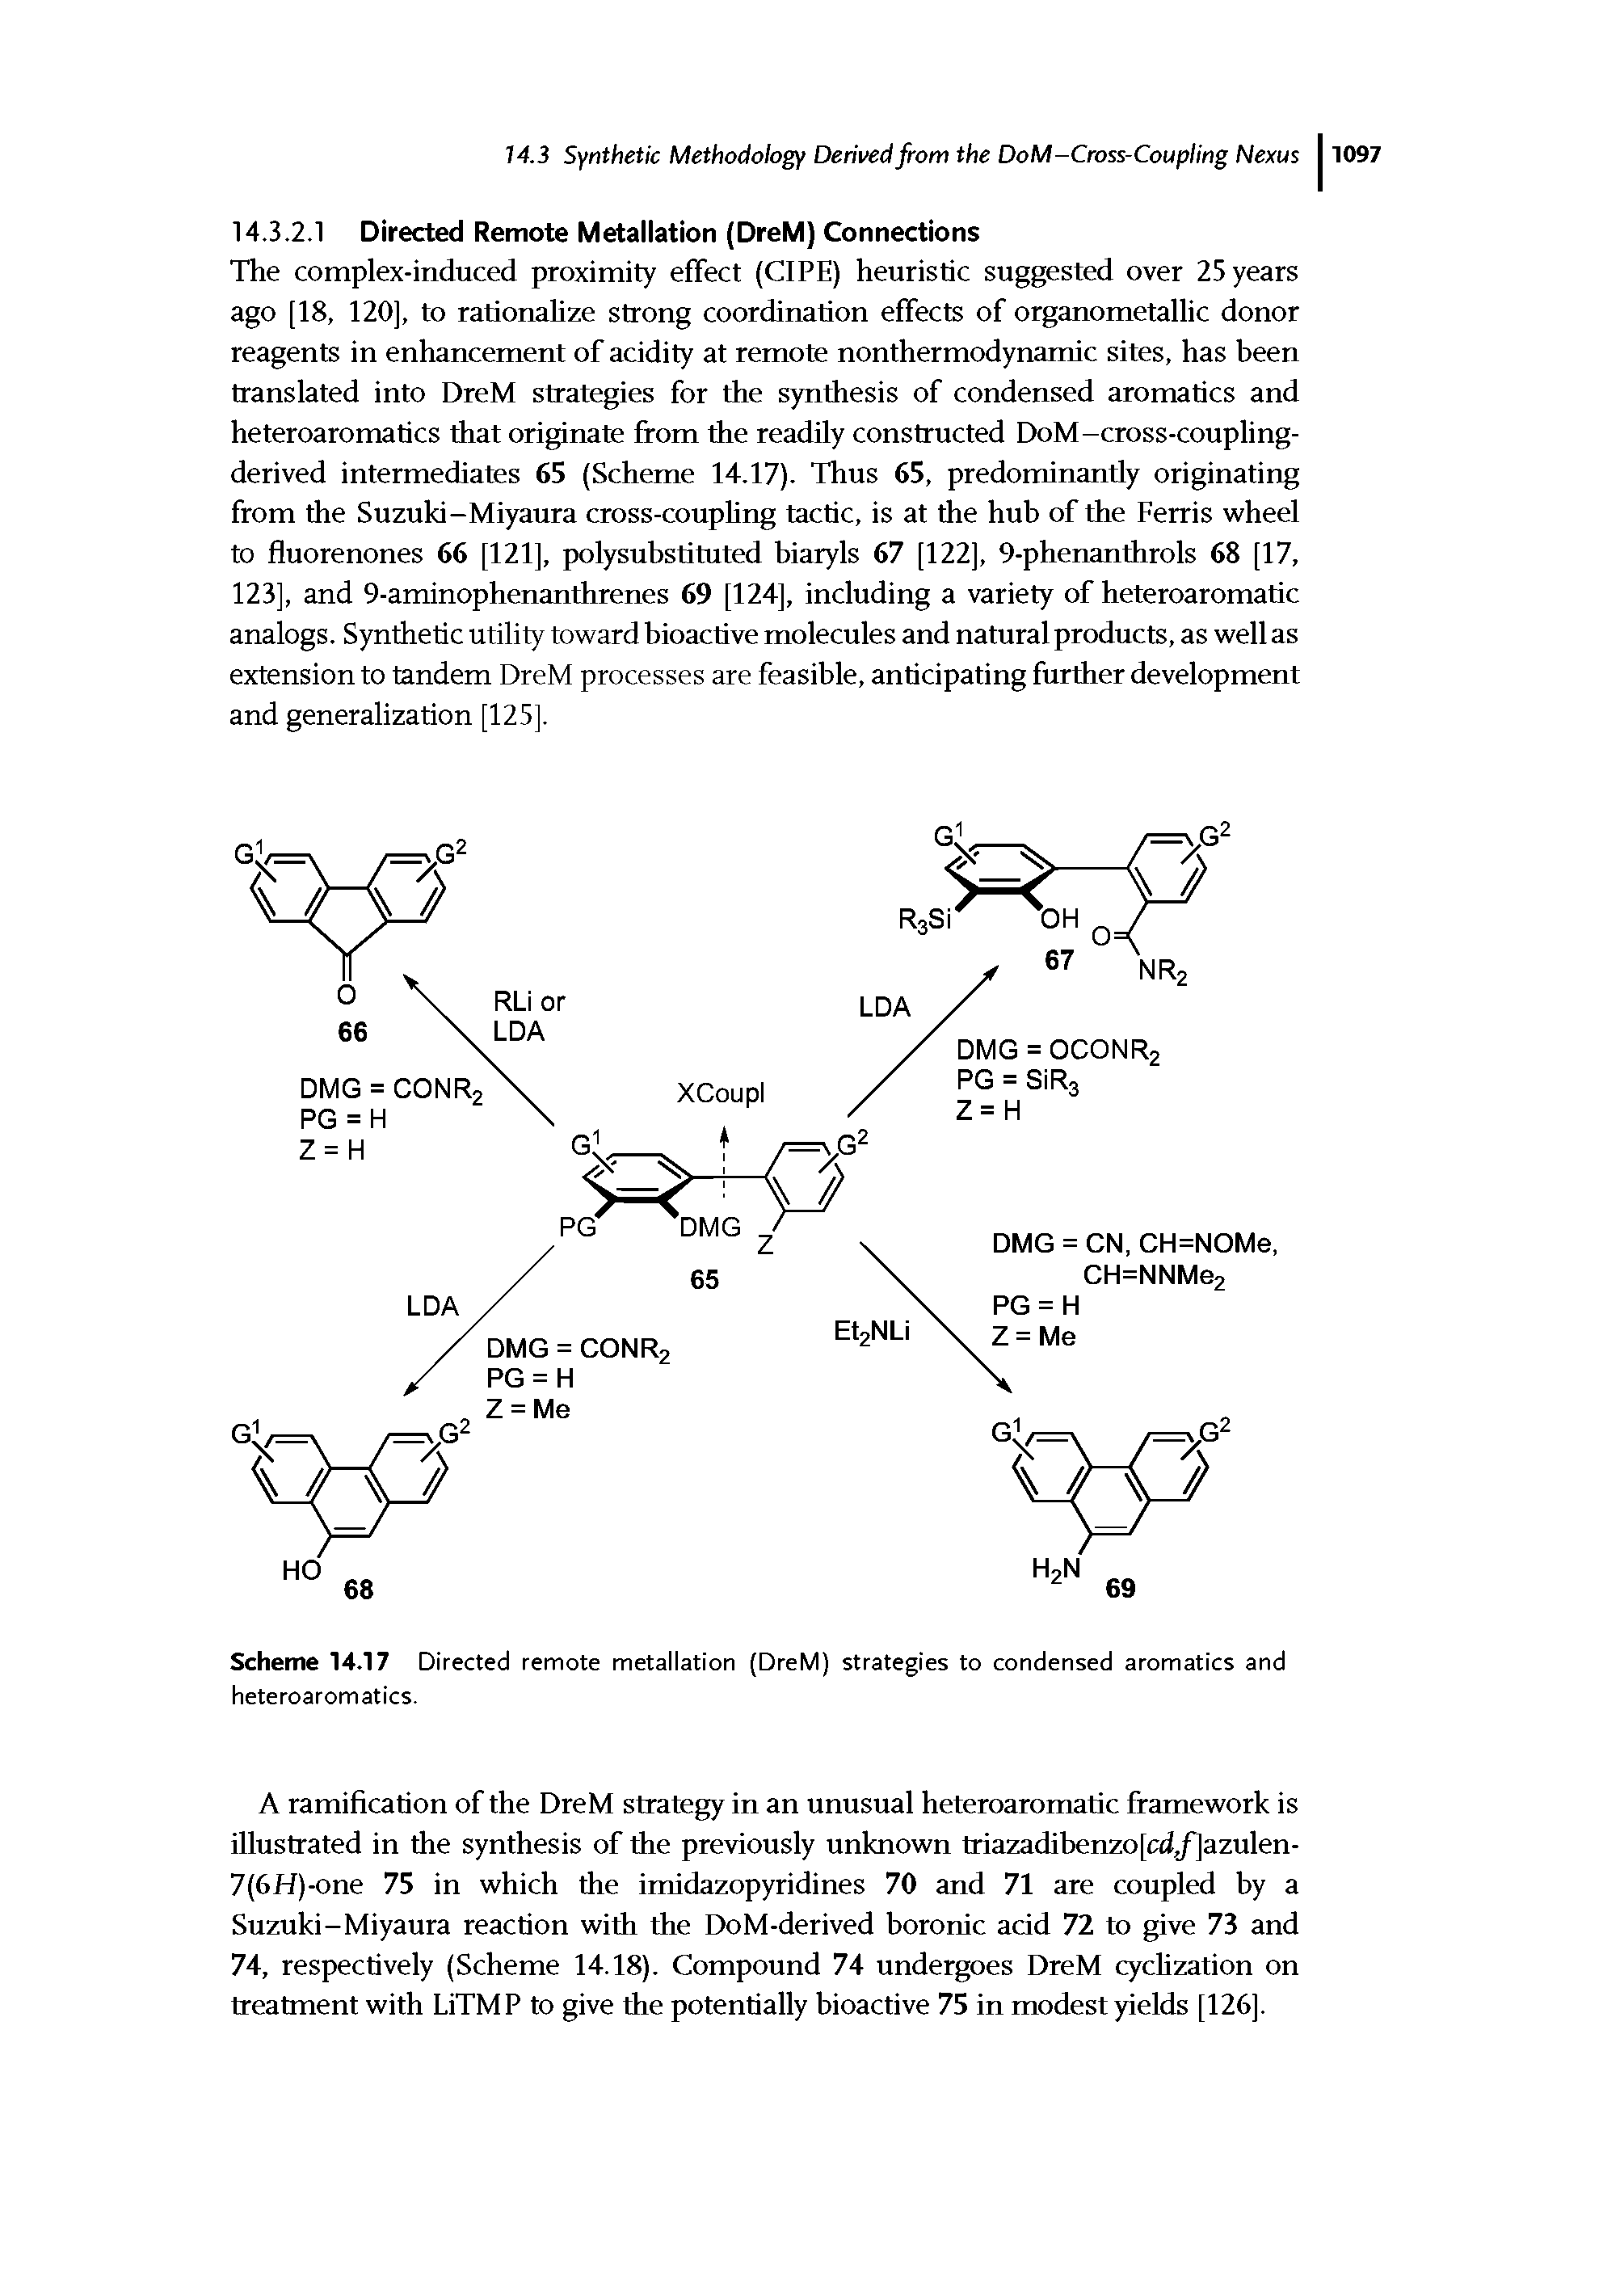 Scheme 14.17 Directed remote metallation (DreM) strategies to condensed aromatics and heteroaromatics.